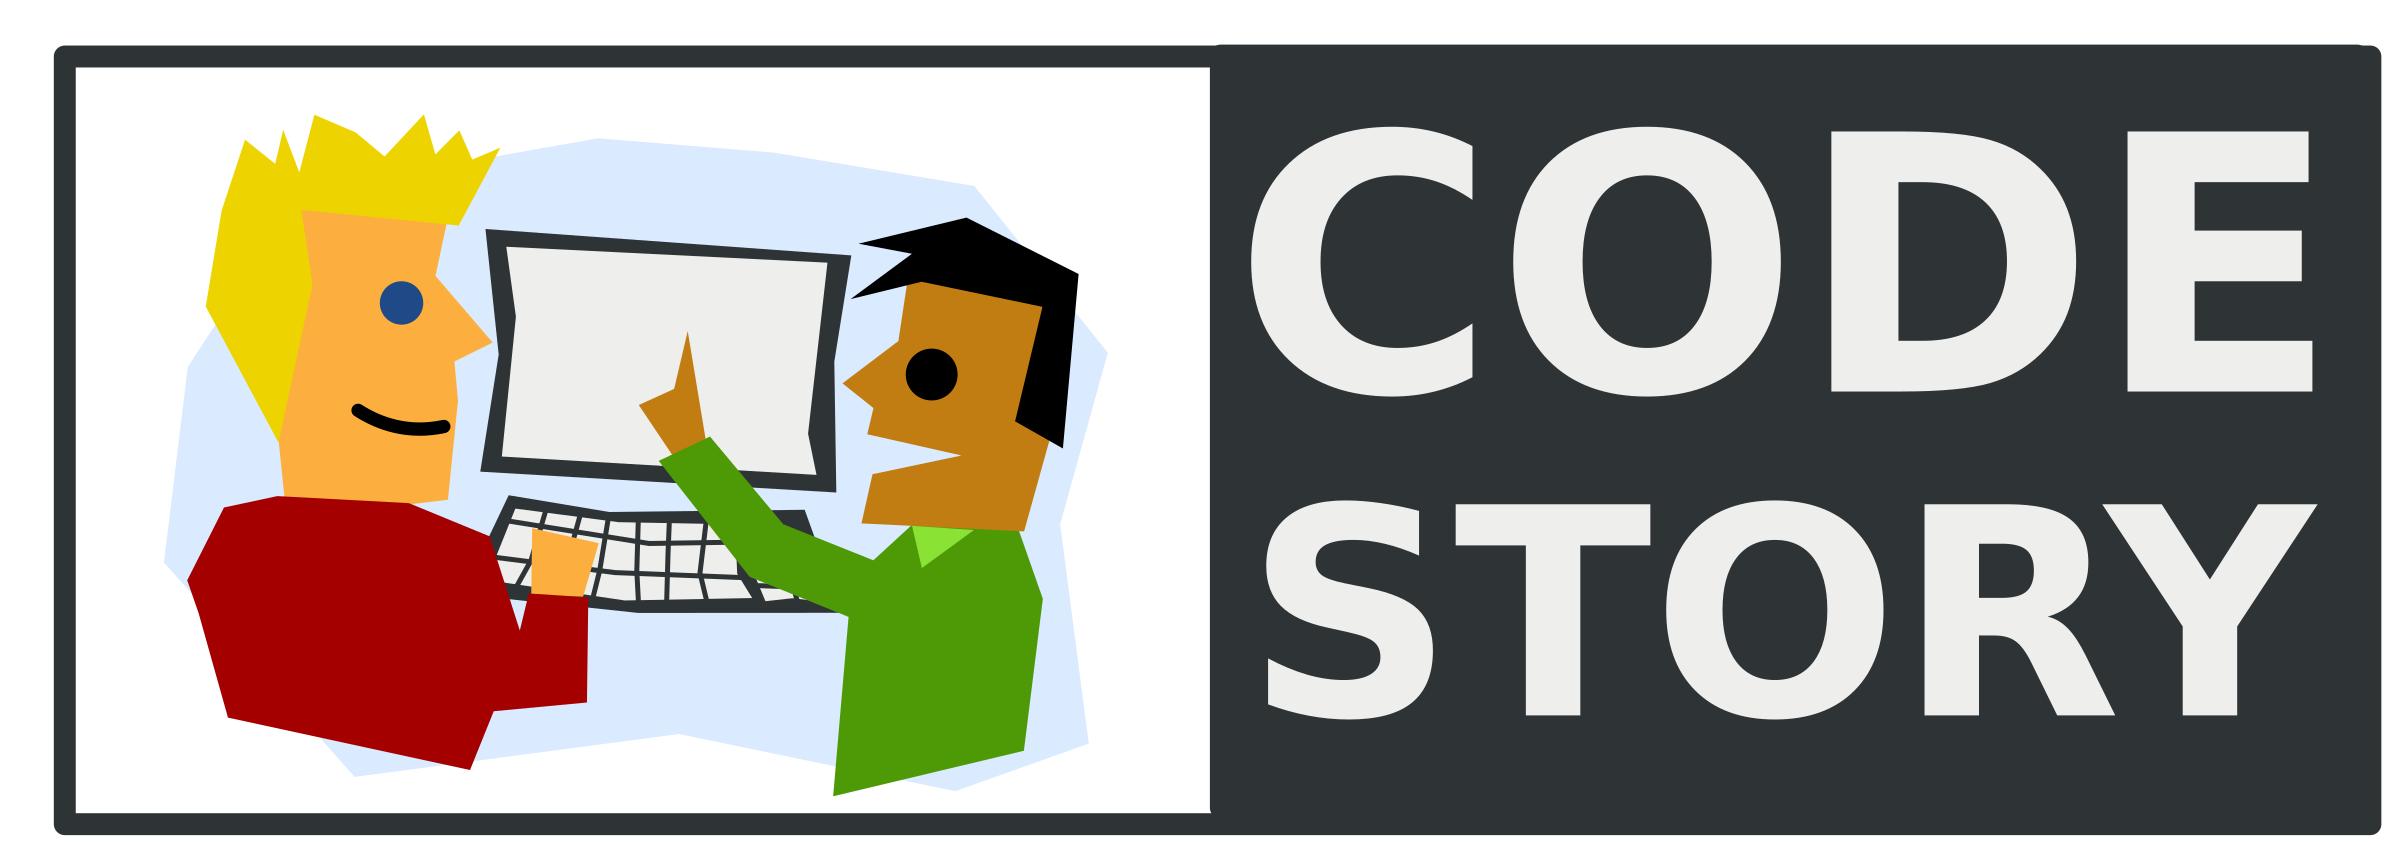 Code Story logo png